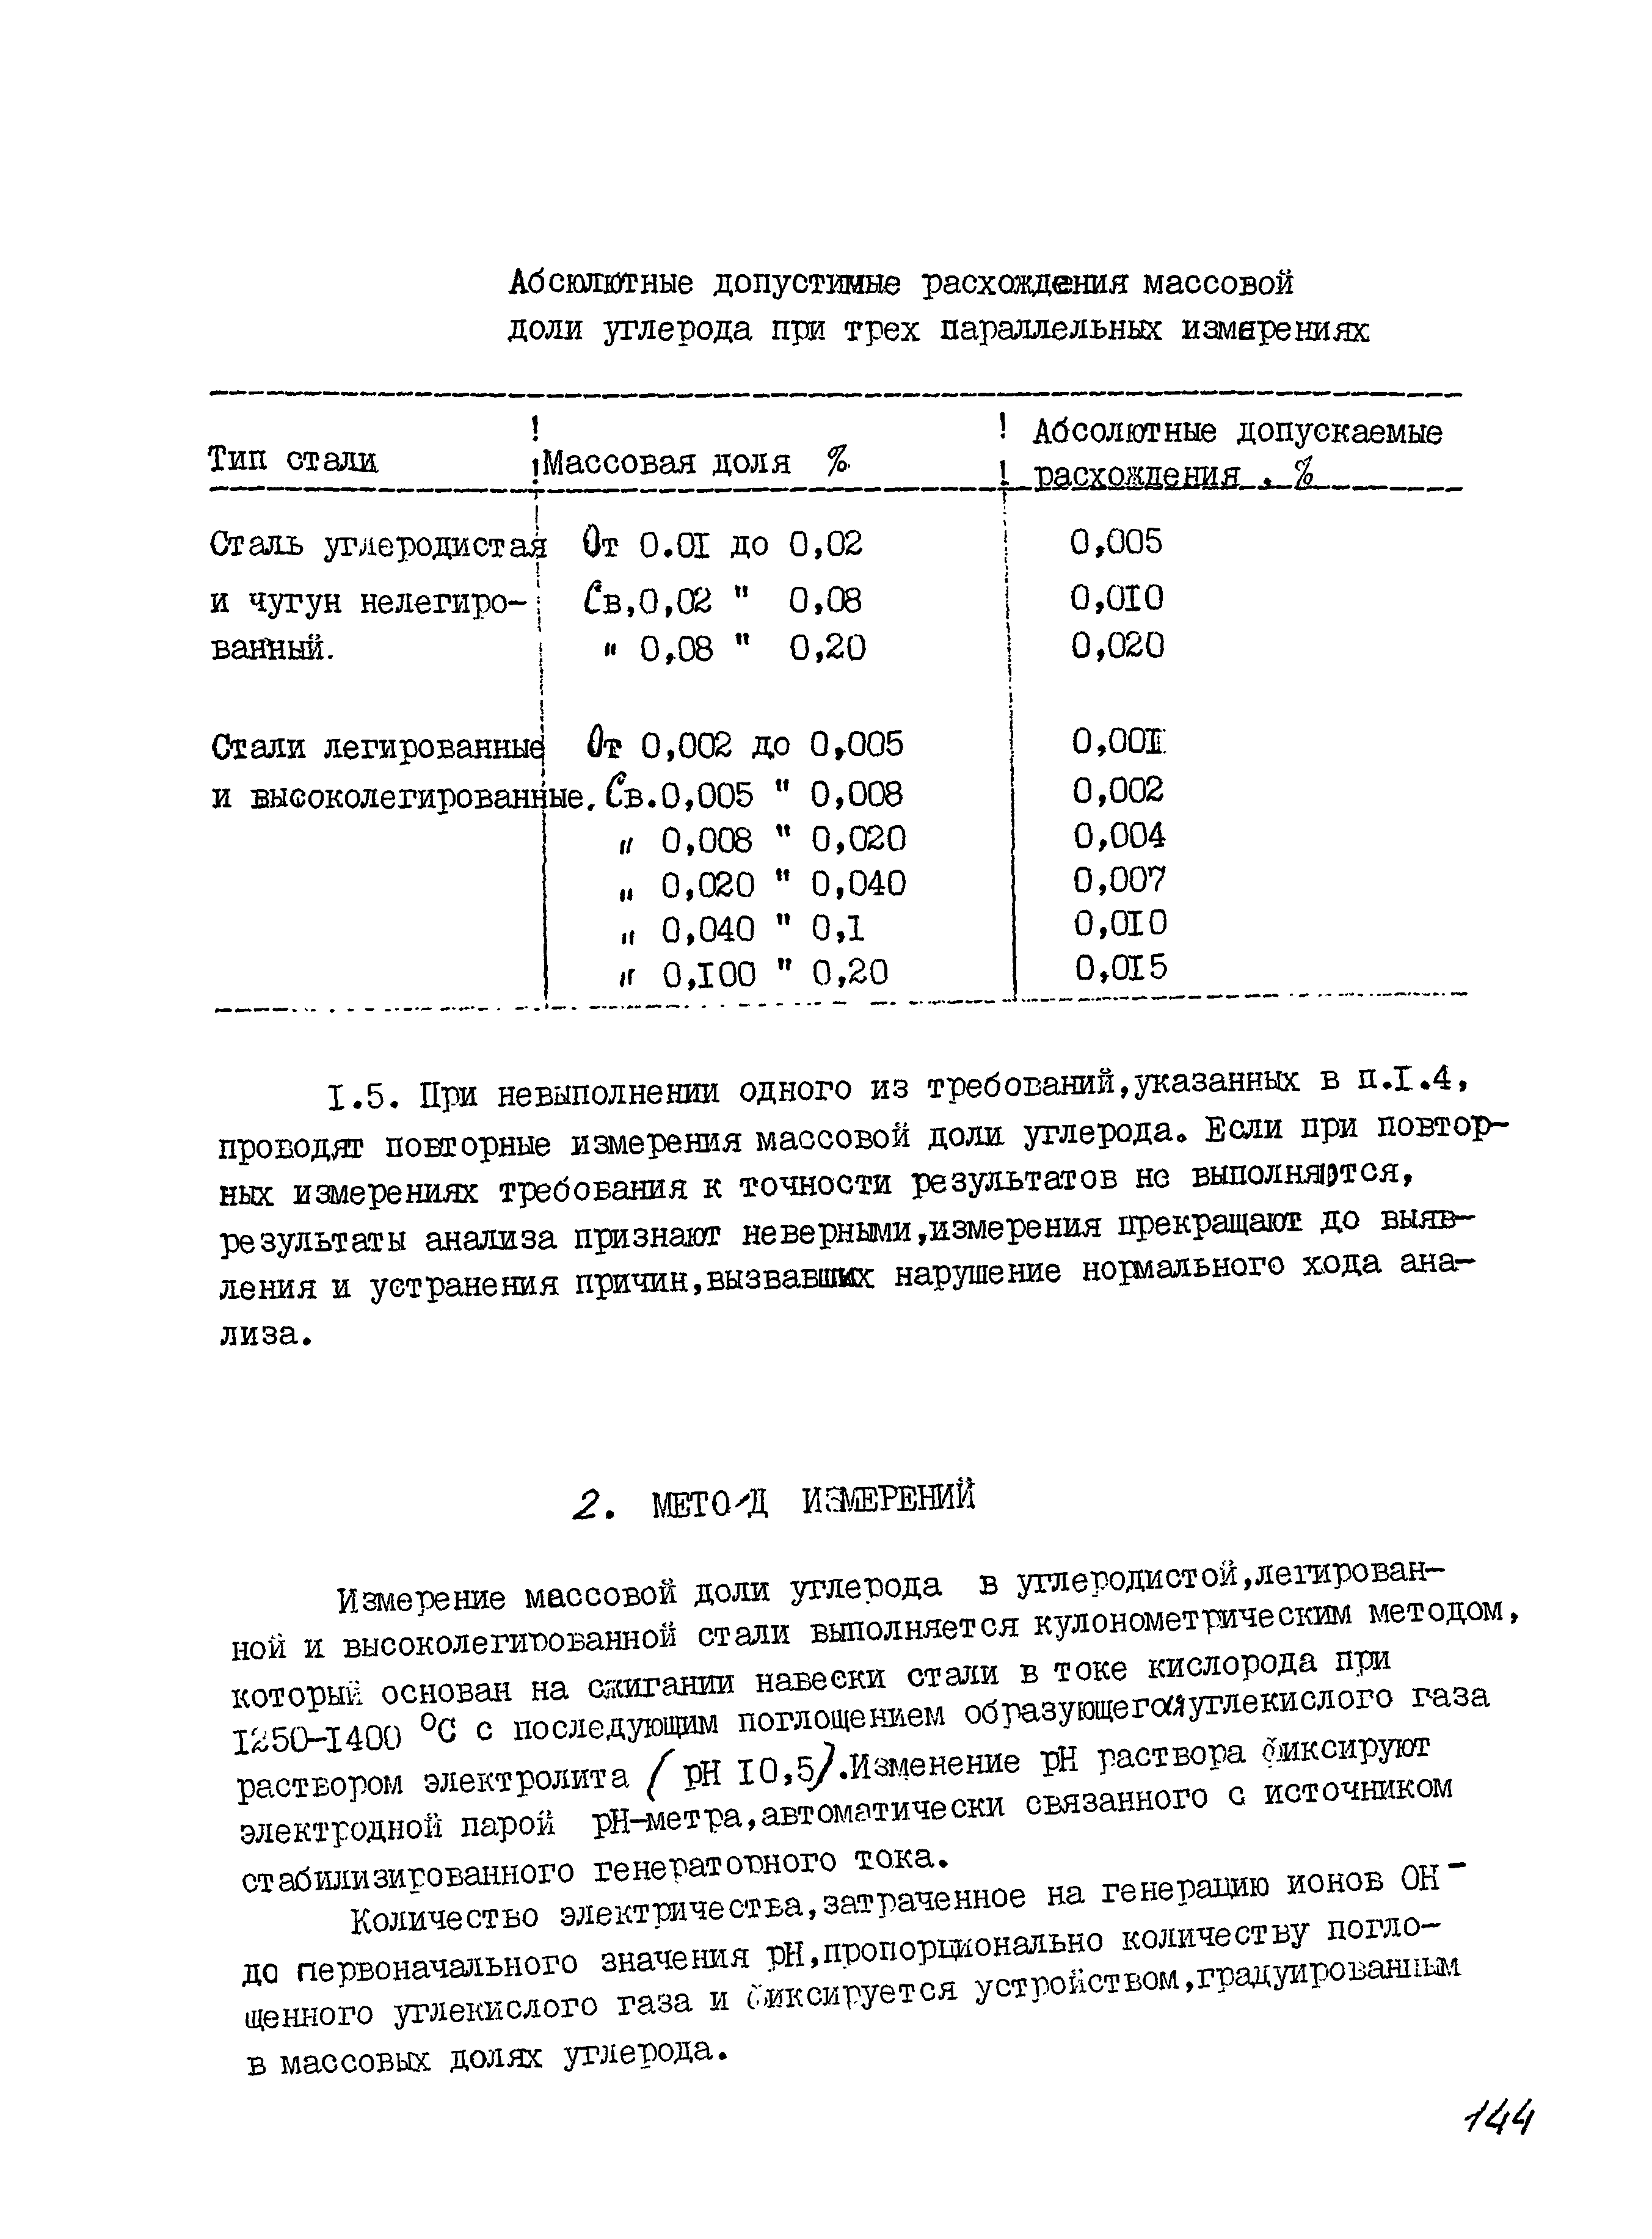 РДМ 929-23-93